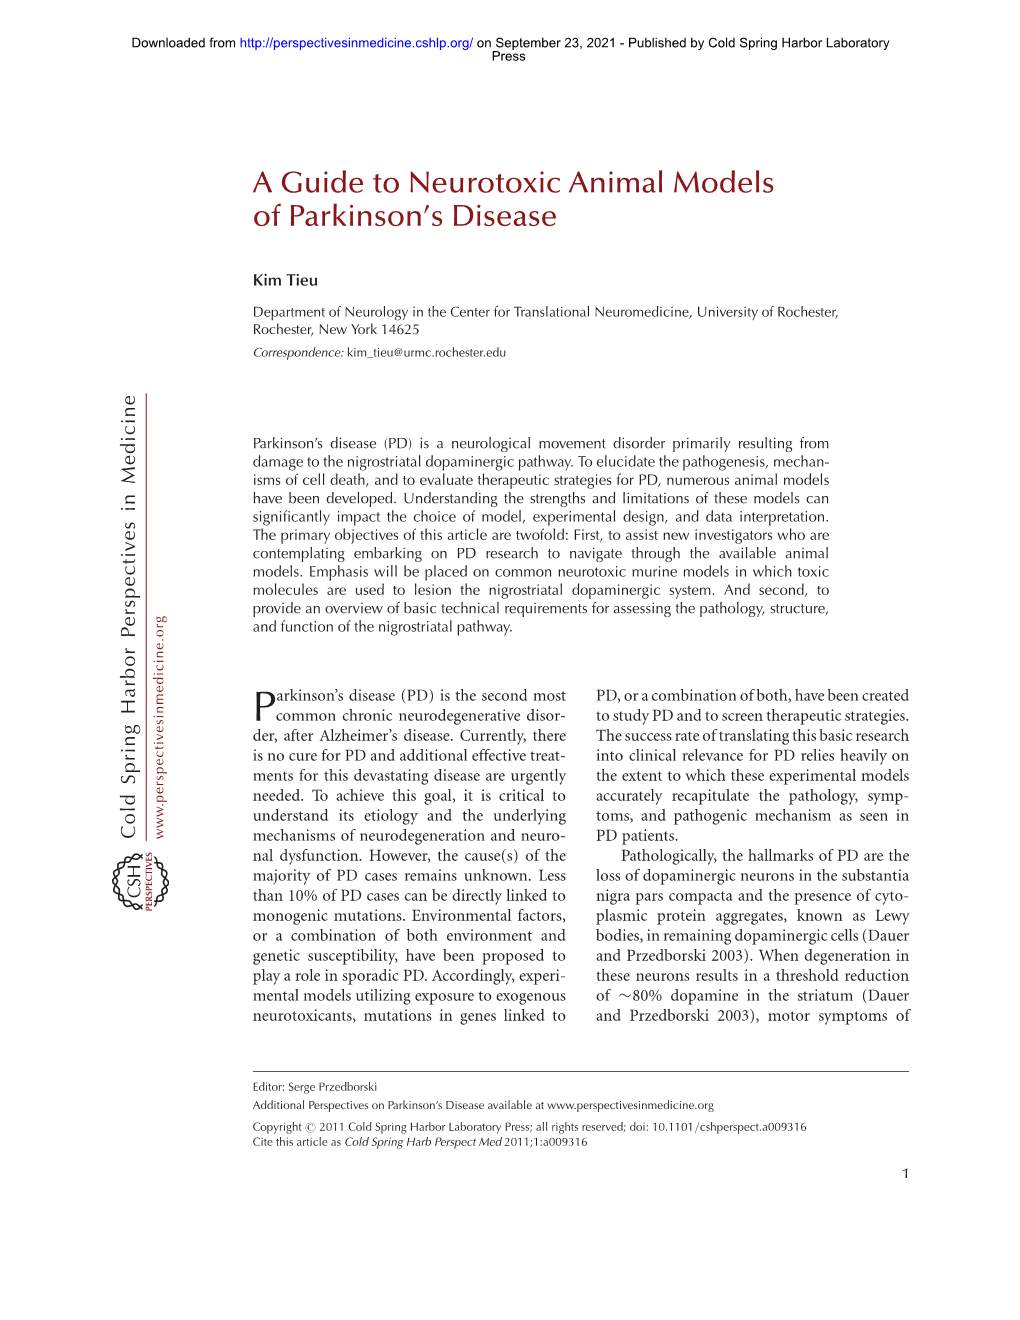 A Guide to Neurotoxic Animal Models of Parkinson's Disease